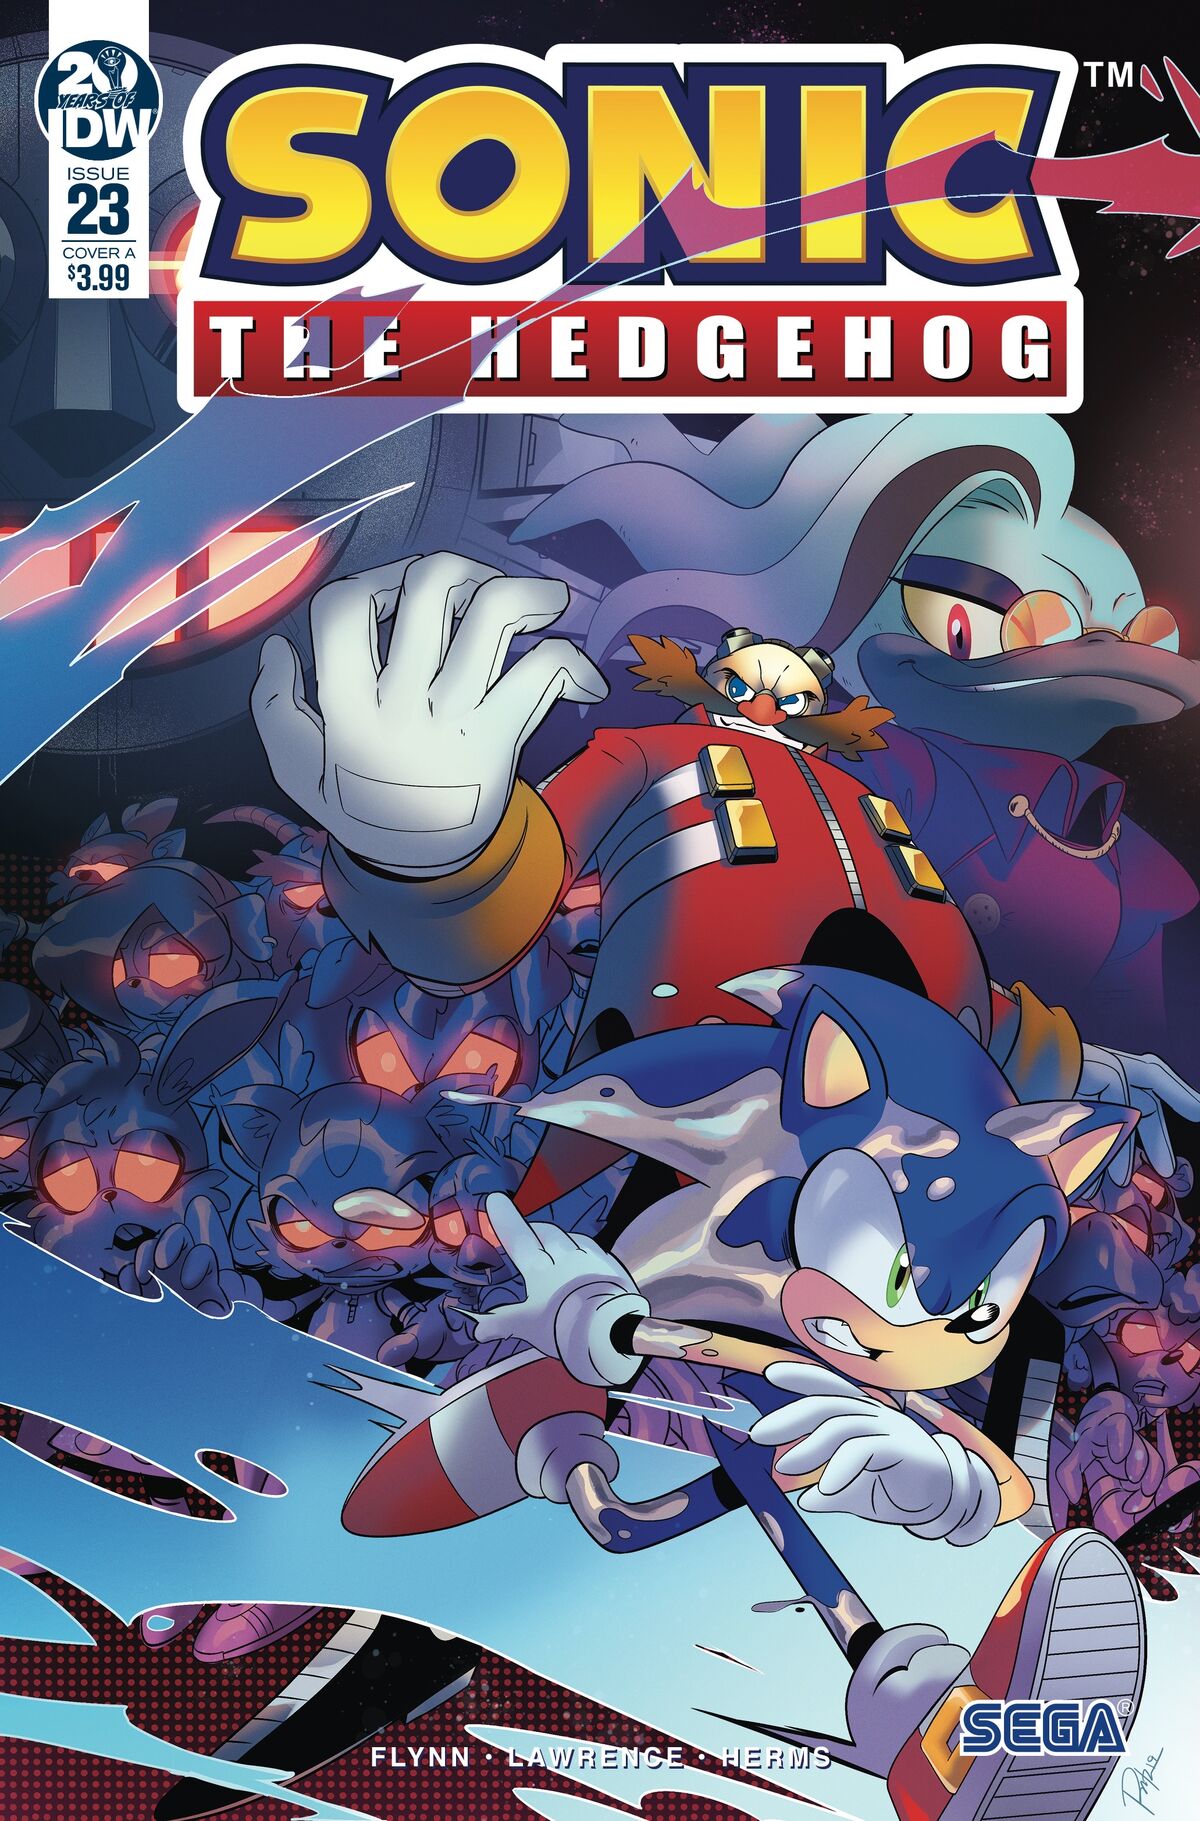 IDW Sonic the Hedgehog Issue 23 | Sonic Wiki Zone | Fandom